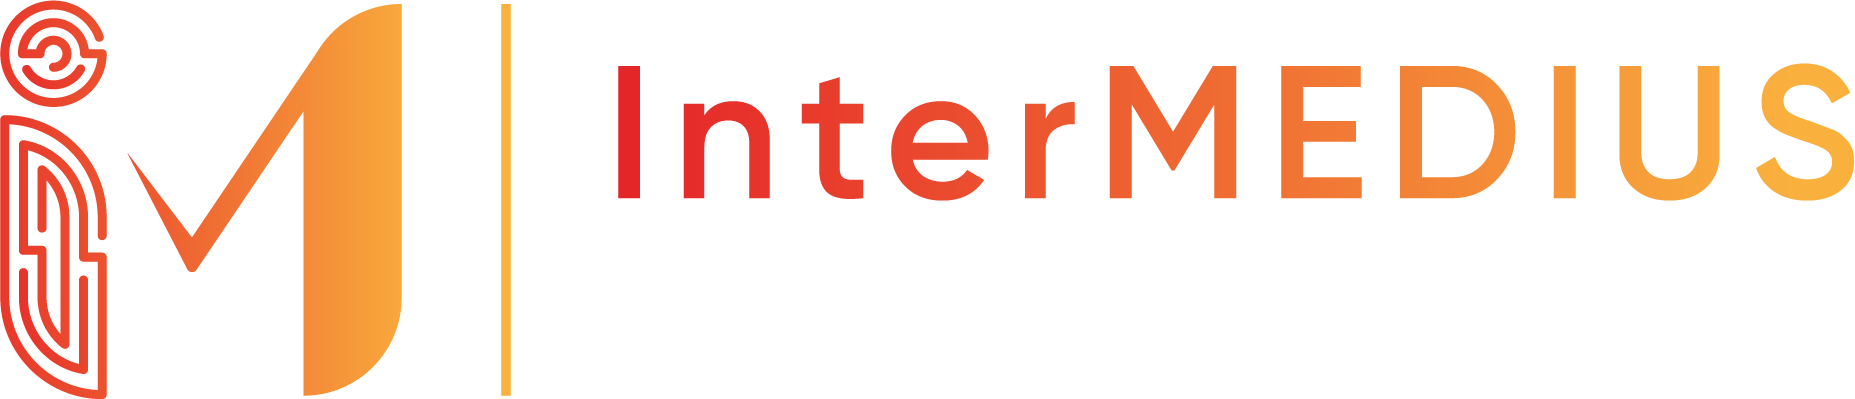 Inter-MEDIUS